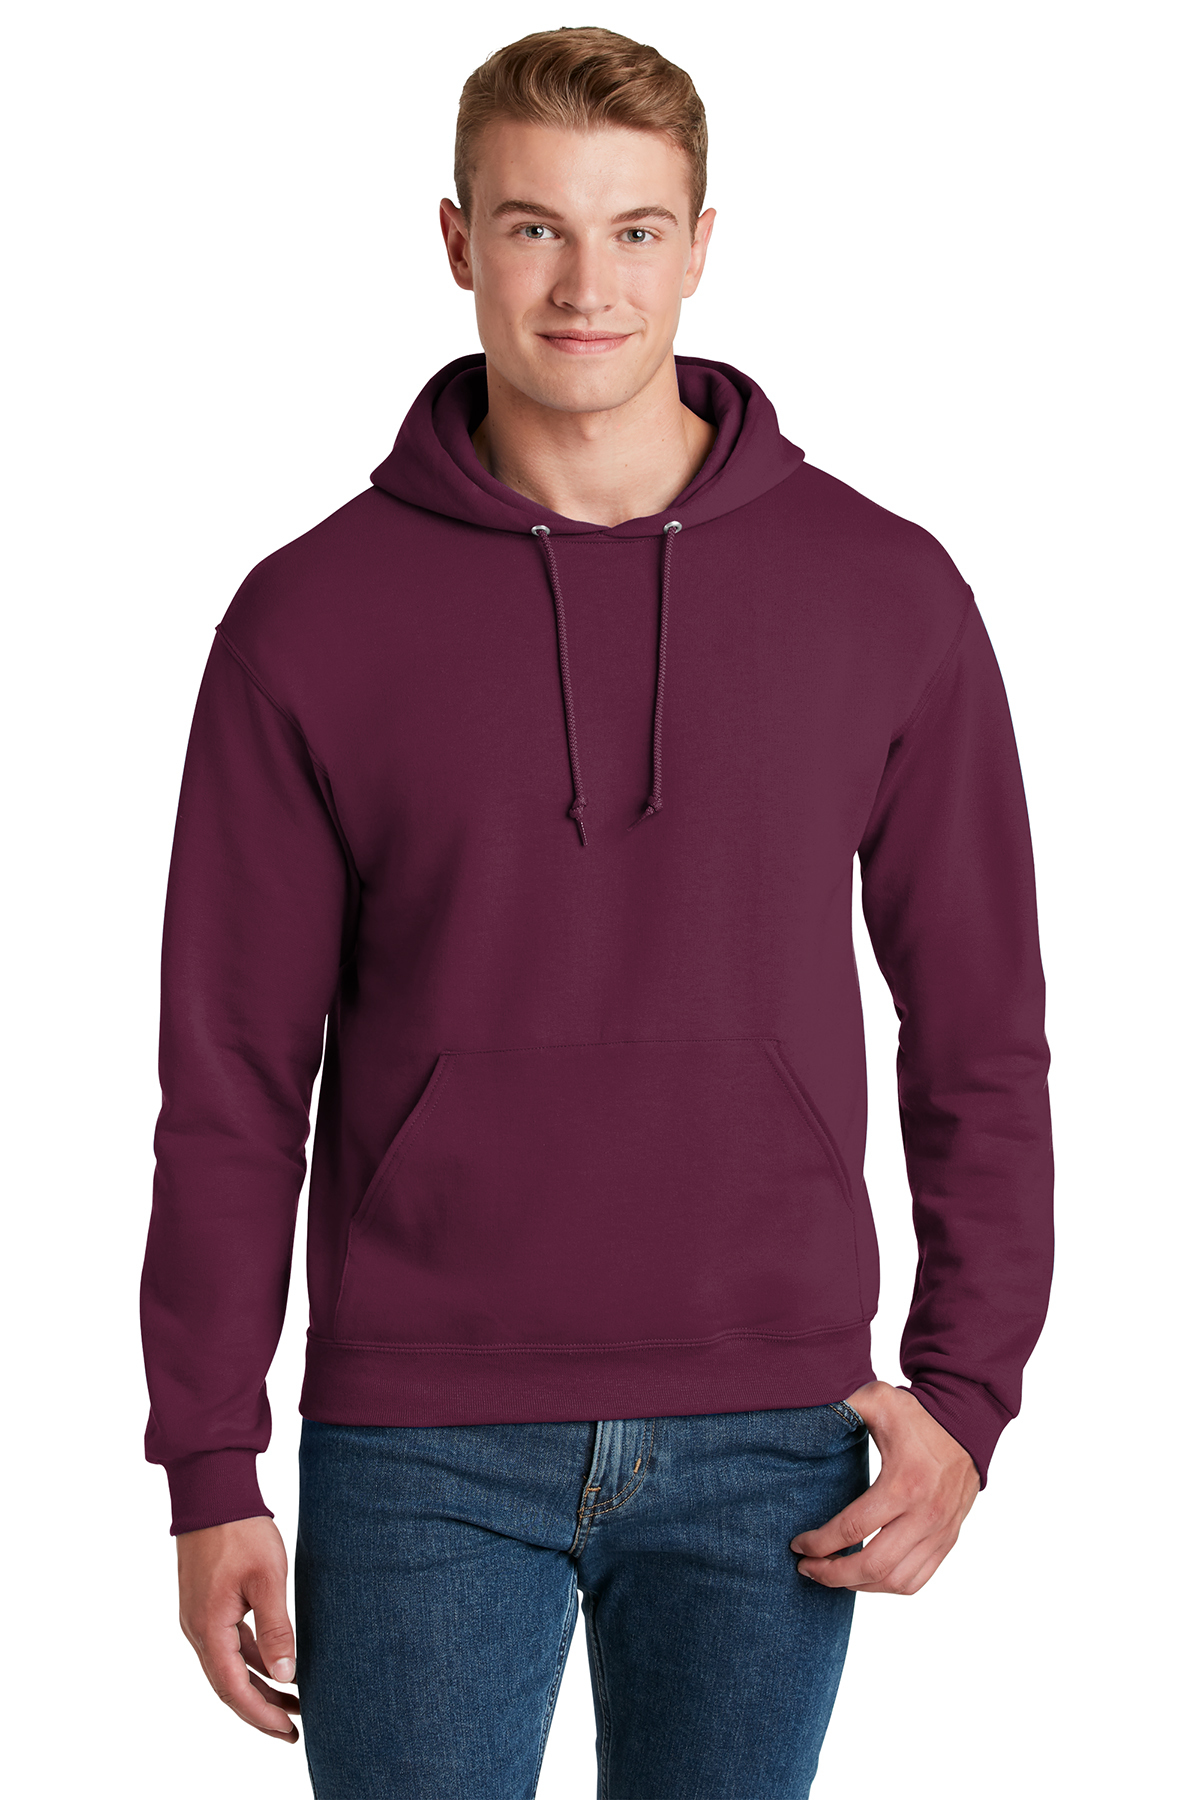 Jerzees - NuBlend Pullover Hooded Sweatshirt | Product | Online Apparel ...